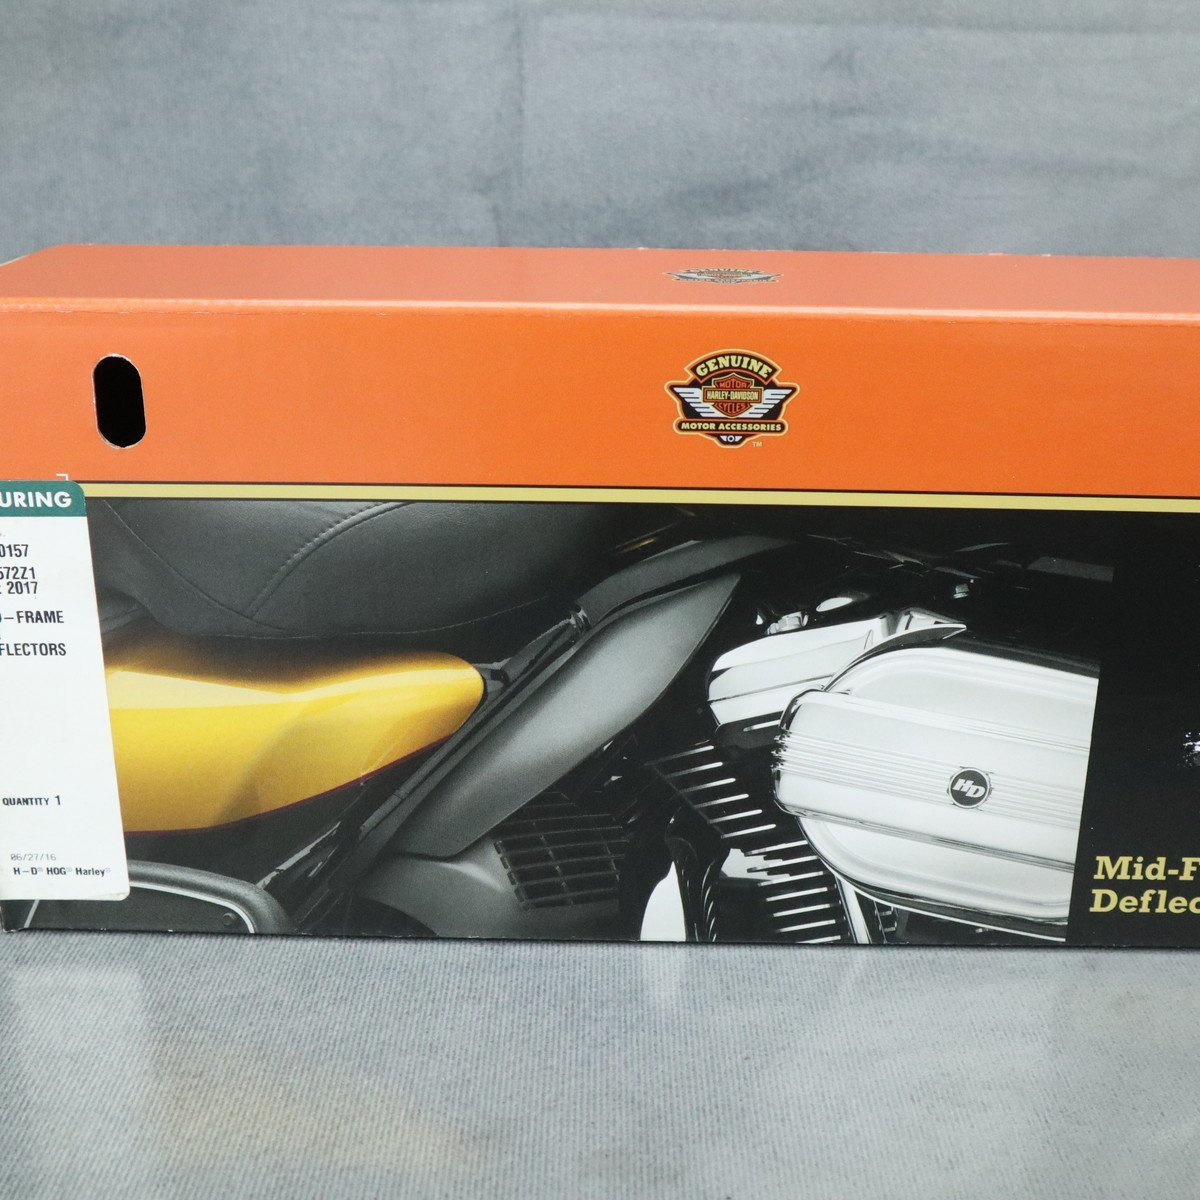  Harley оригинальная опция 57200157 touring / трицикл 17- mid рама воздушный дефлектор 230807IN0037